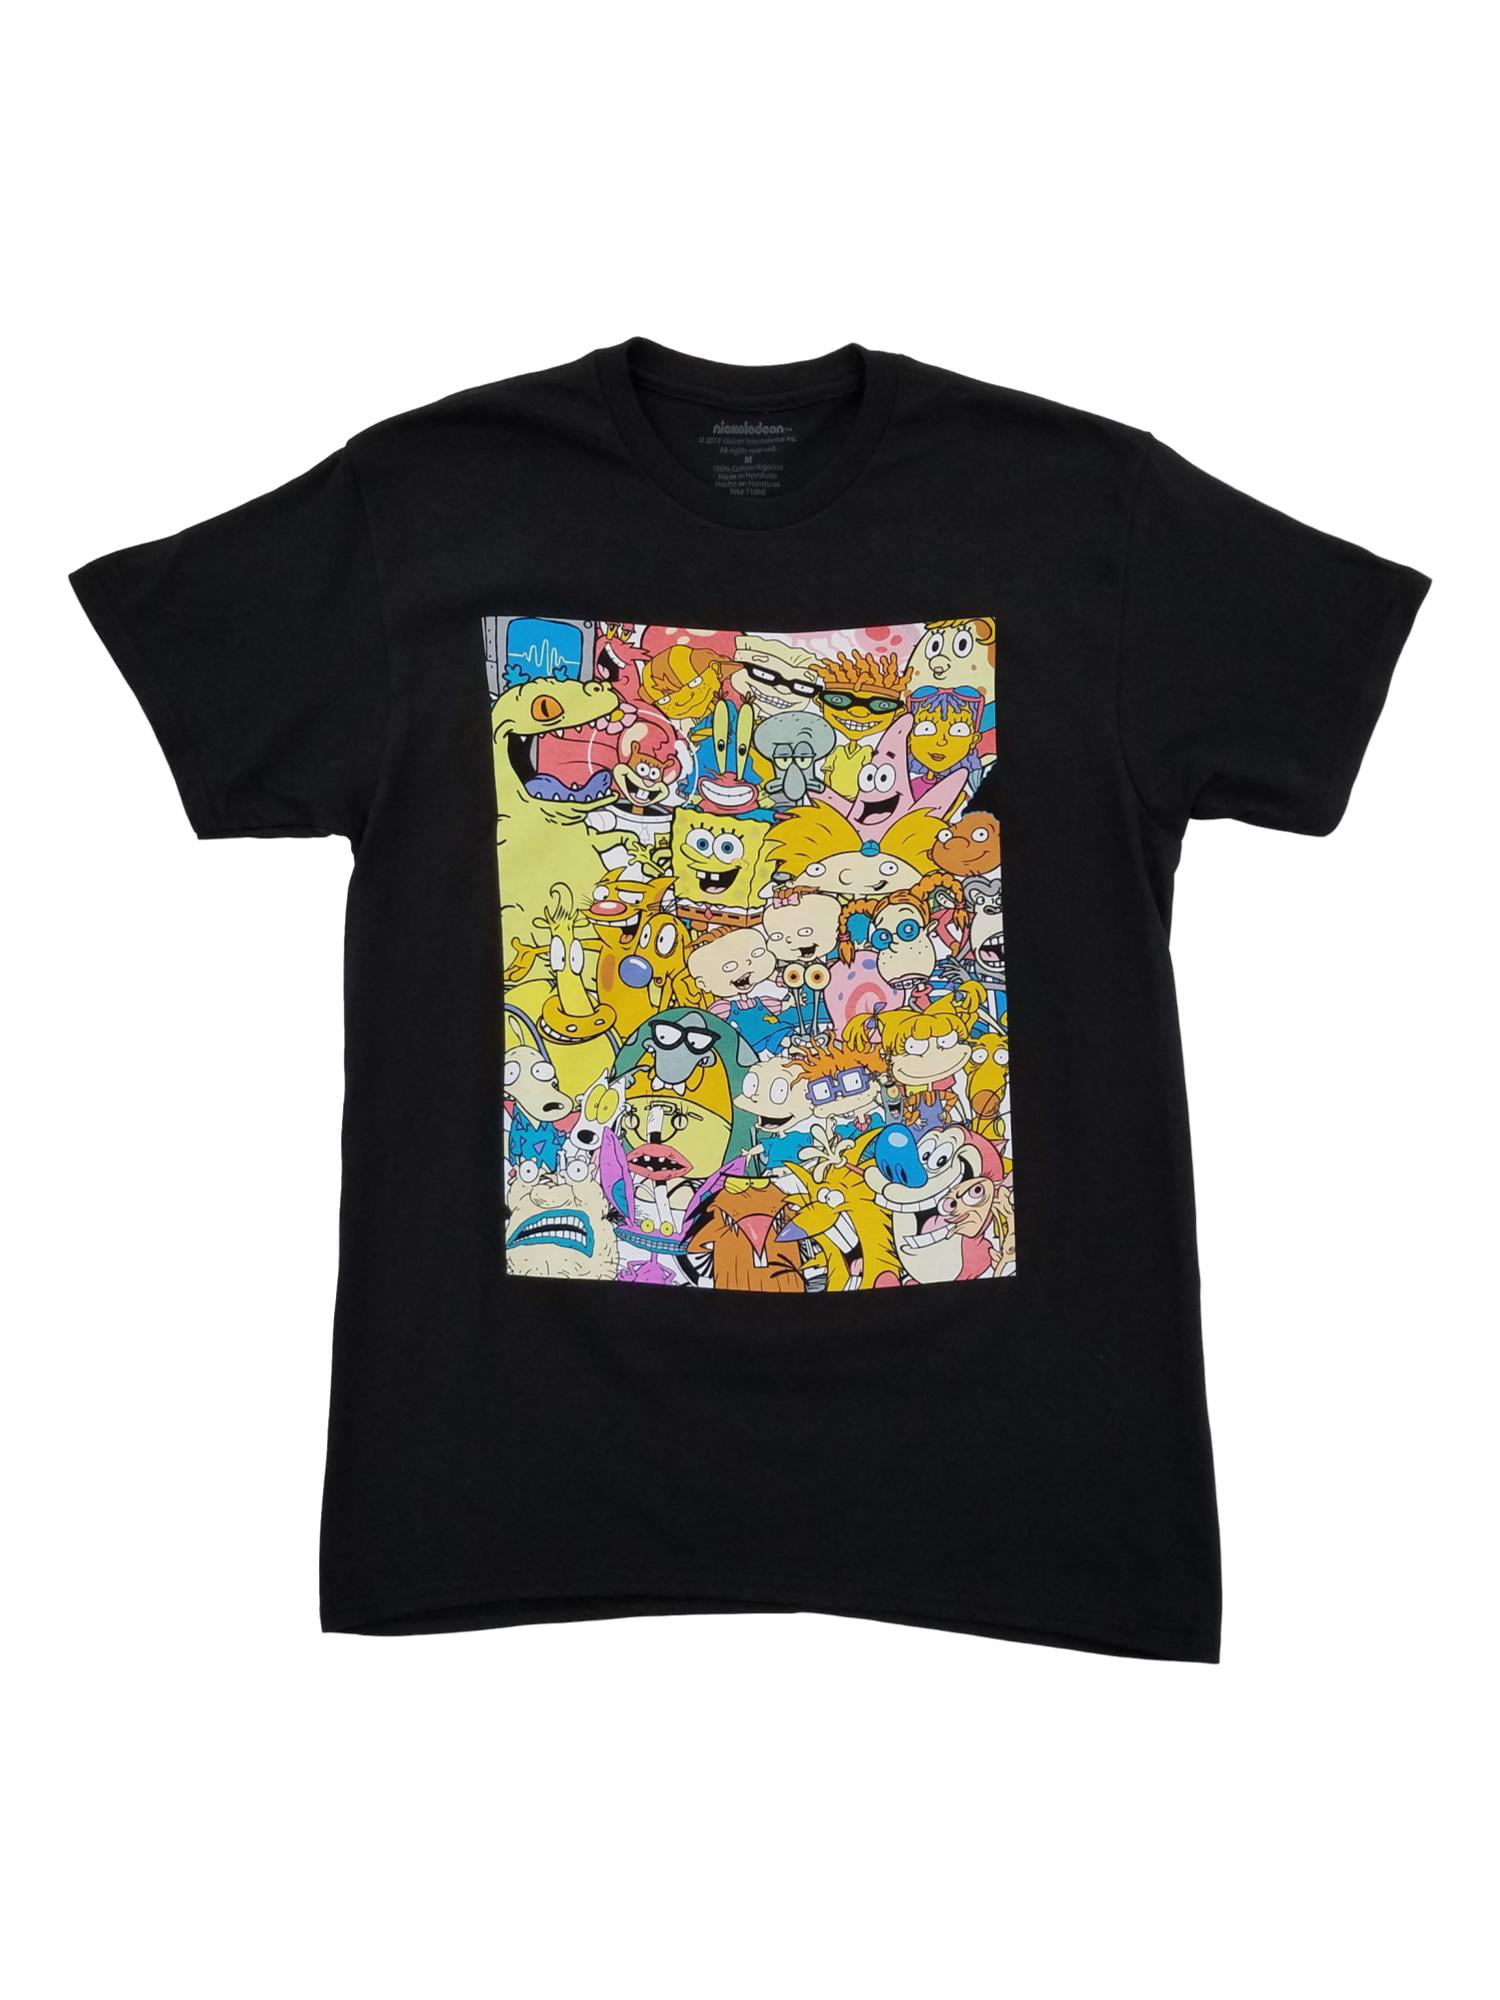 Nickelodeon 90's Cartoons Ren & Stimpy SpongeBob T Shirt Size S-5XL Man Women 